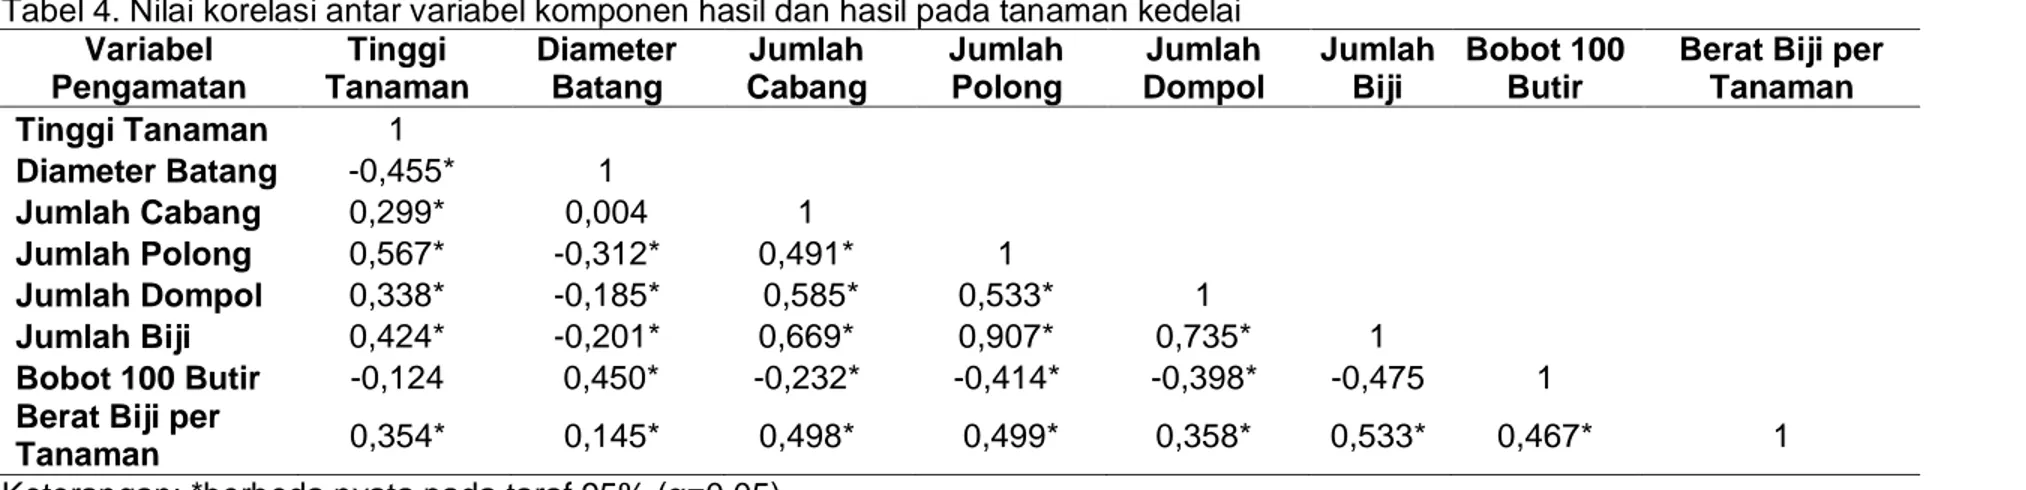 Tabel 4. Nilai korelasi antar variabel komponen hasil dan hasil pada tanaman kedelai   Variabel  Pengamatan  Tinggi  Tanaman  Diameter Batang  Jumlah  Cabang  Jumlah Polong  Jumlah  Dompol  Jumlah Biji  Bobot 100 Butir 